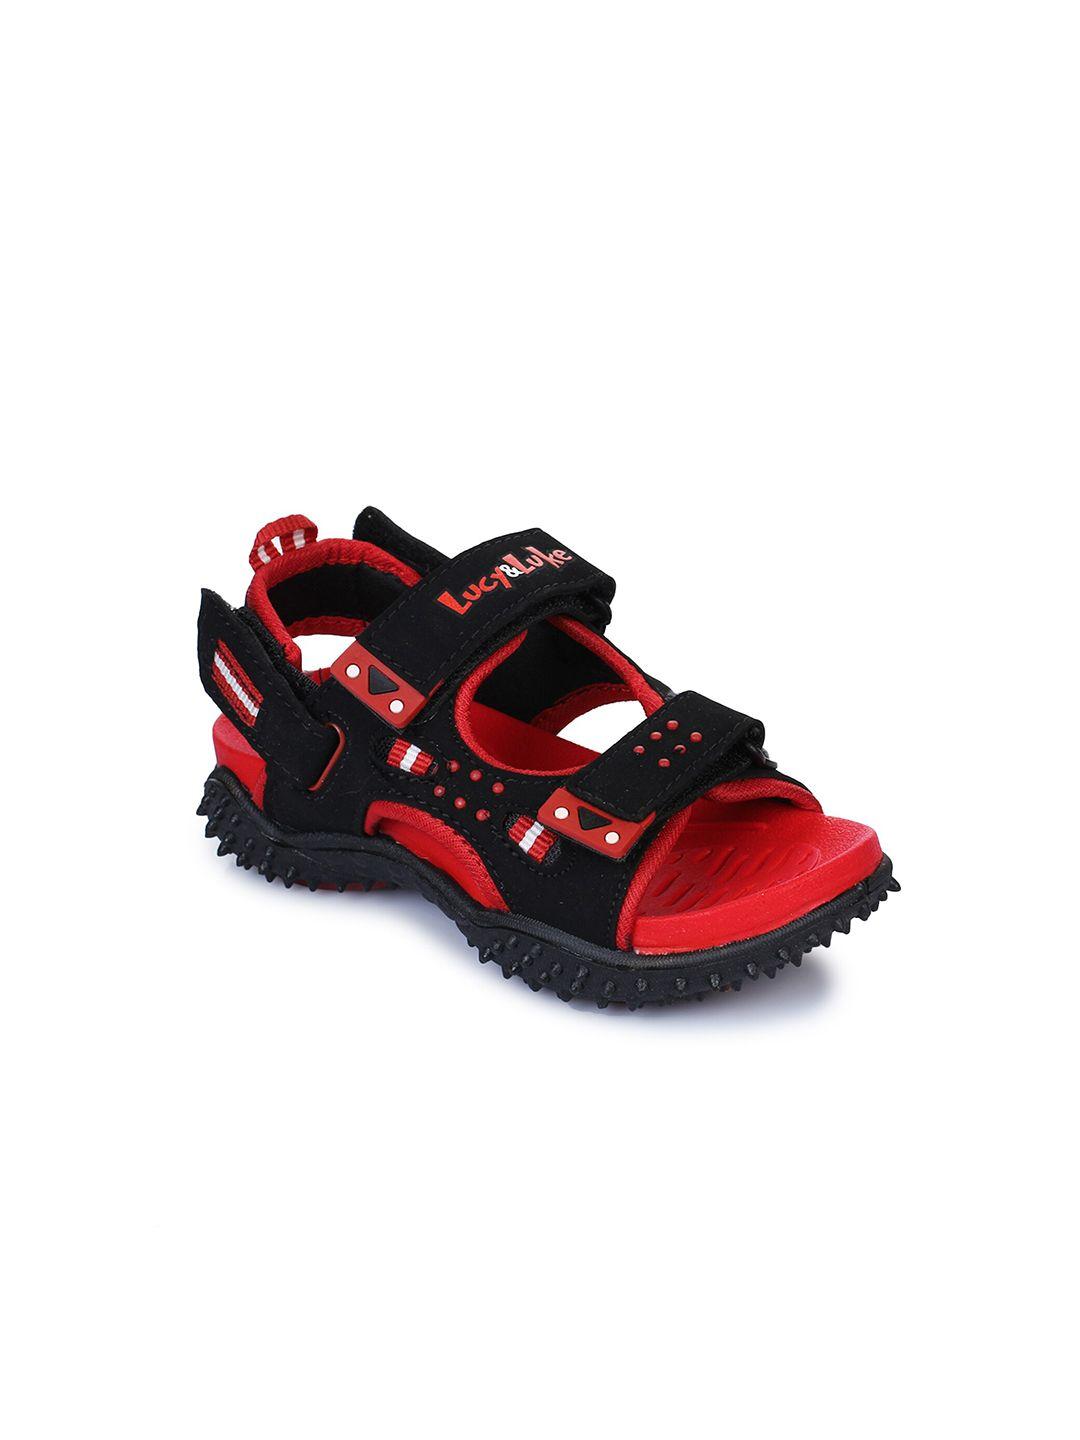 liberty kids black & red comfort sandals